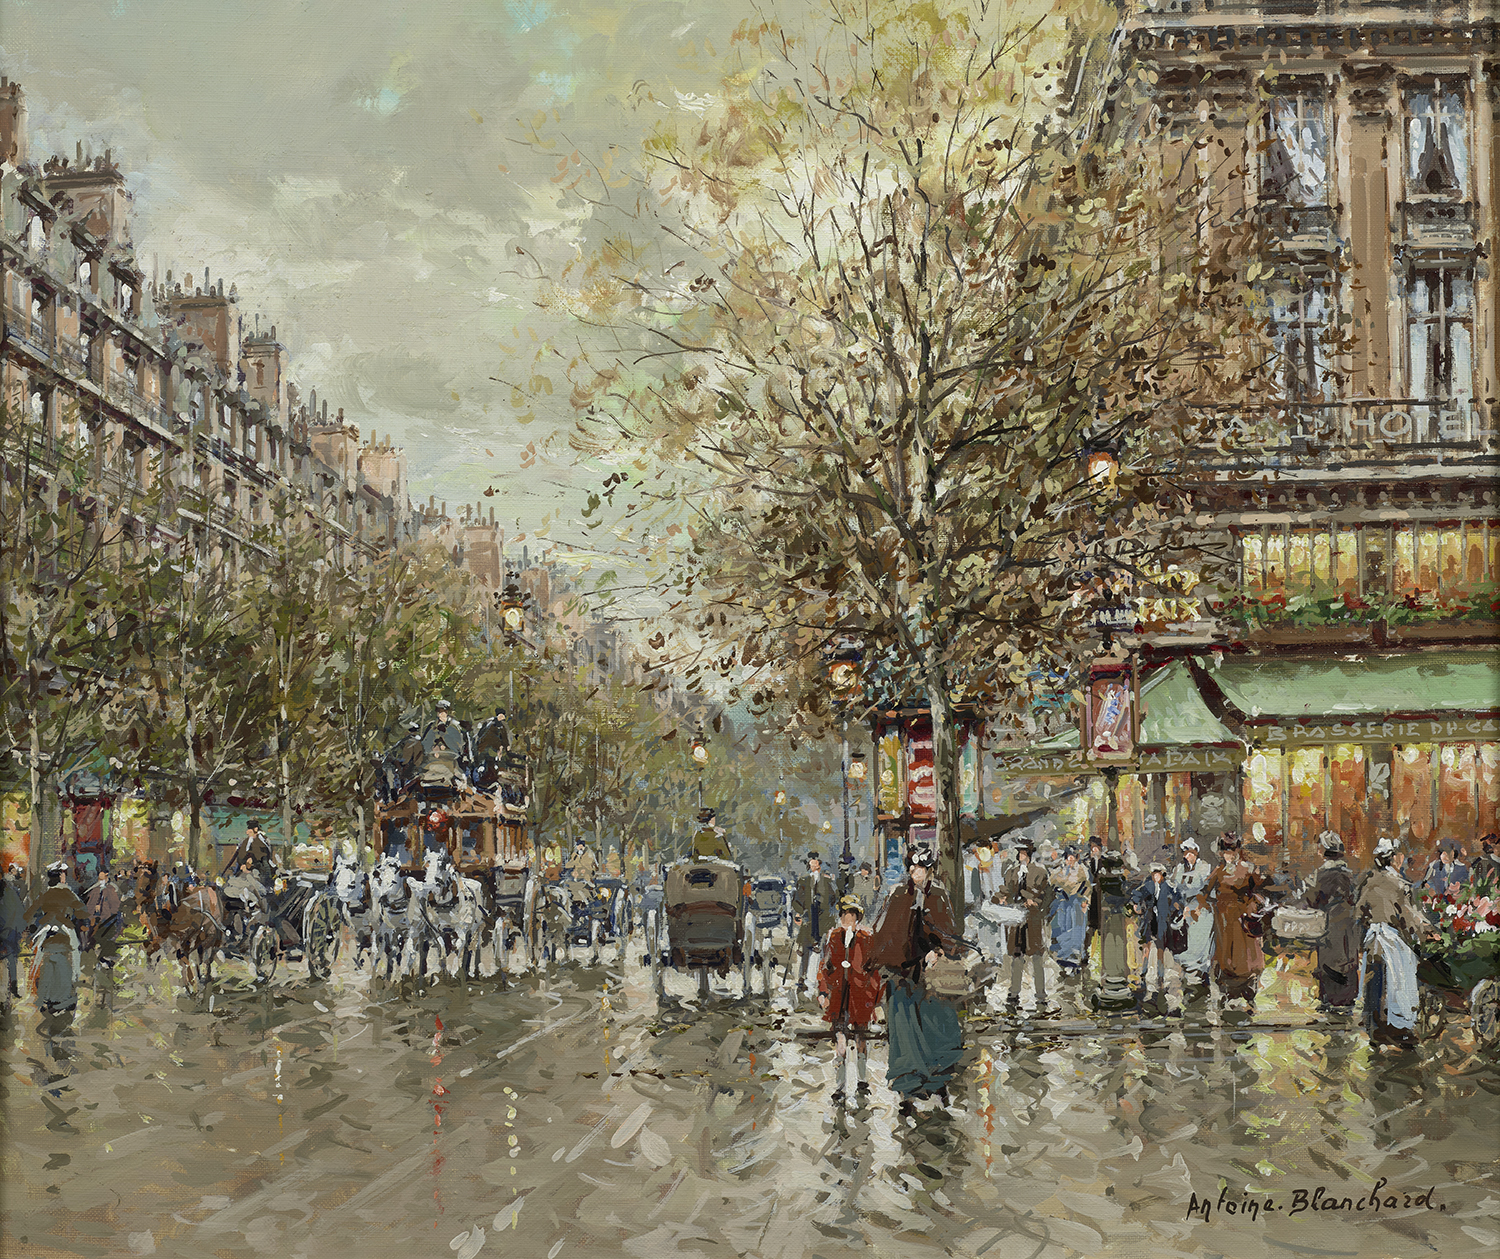 painting by antoine blanchard of cafe de la paix in paris